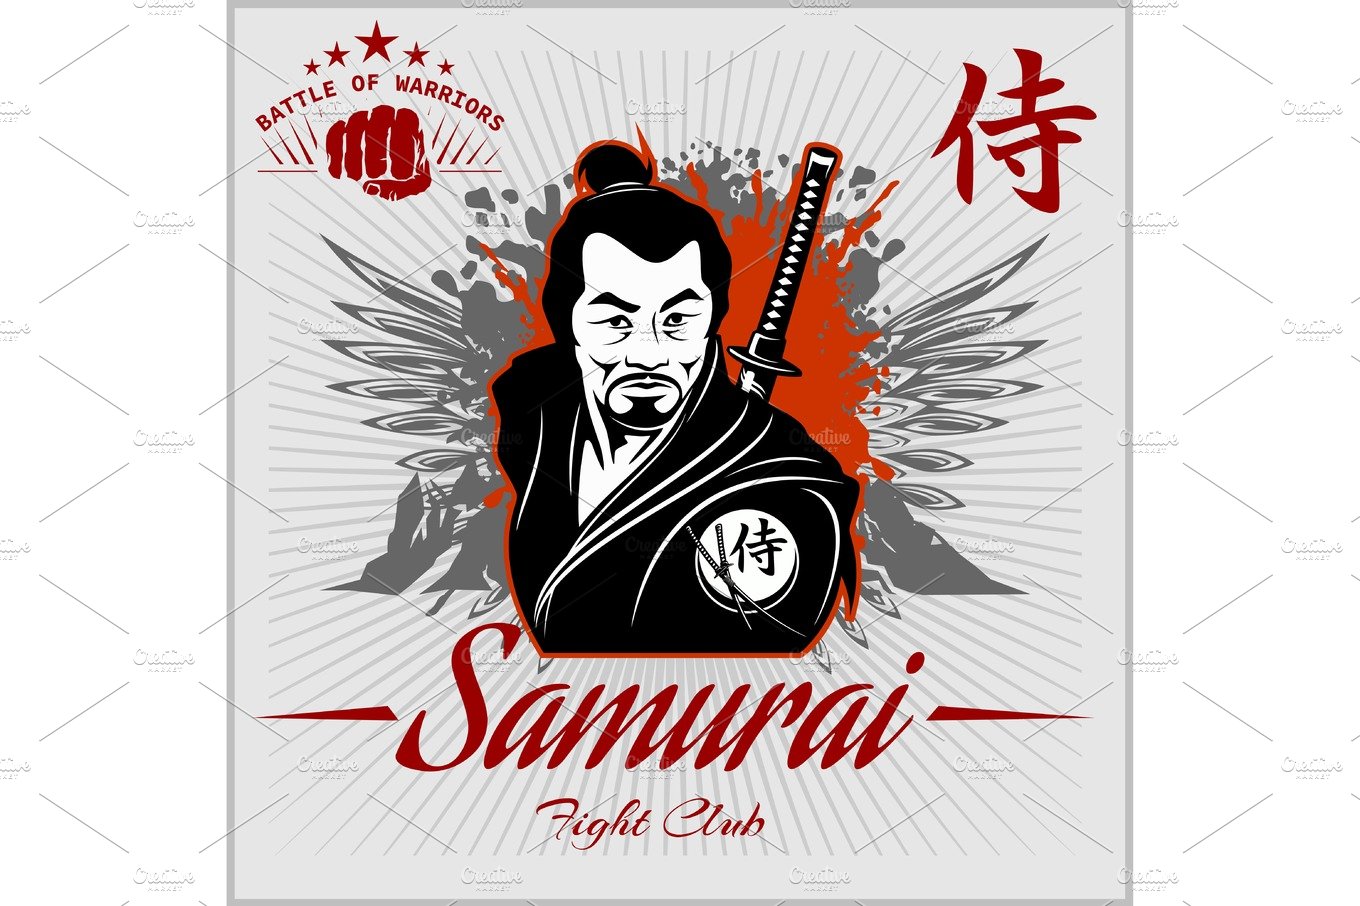 Samurai Warrior With Katana Sword cover image.